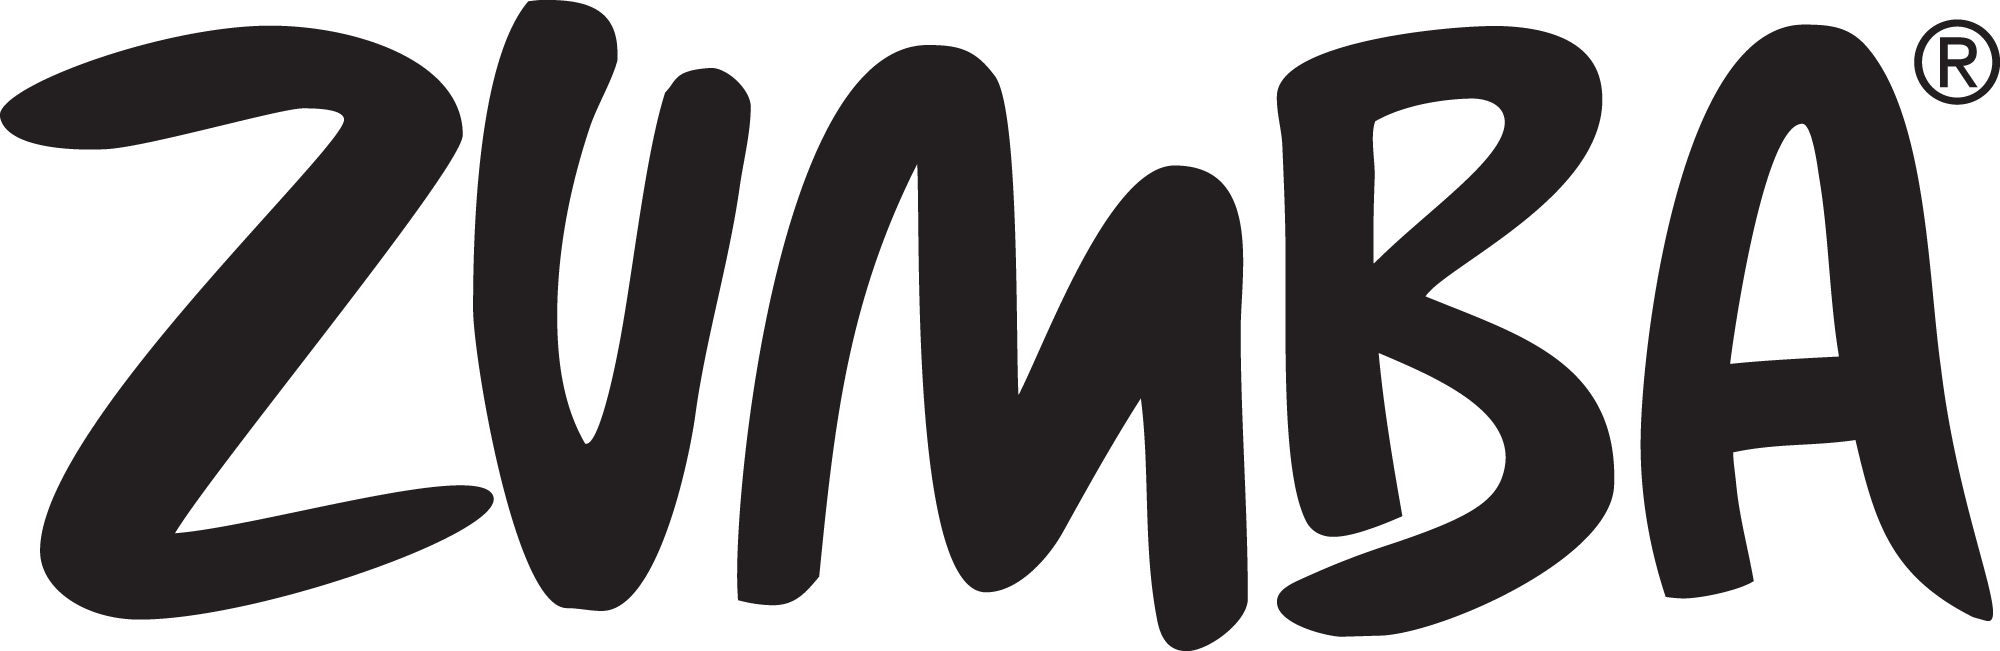 Logo Zumba Monde - Salon BreakFit Tarbes